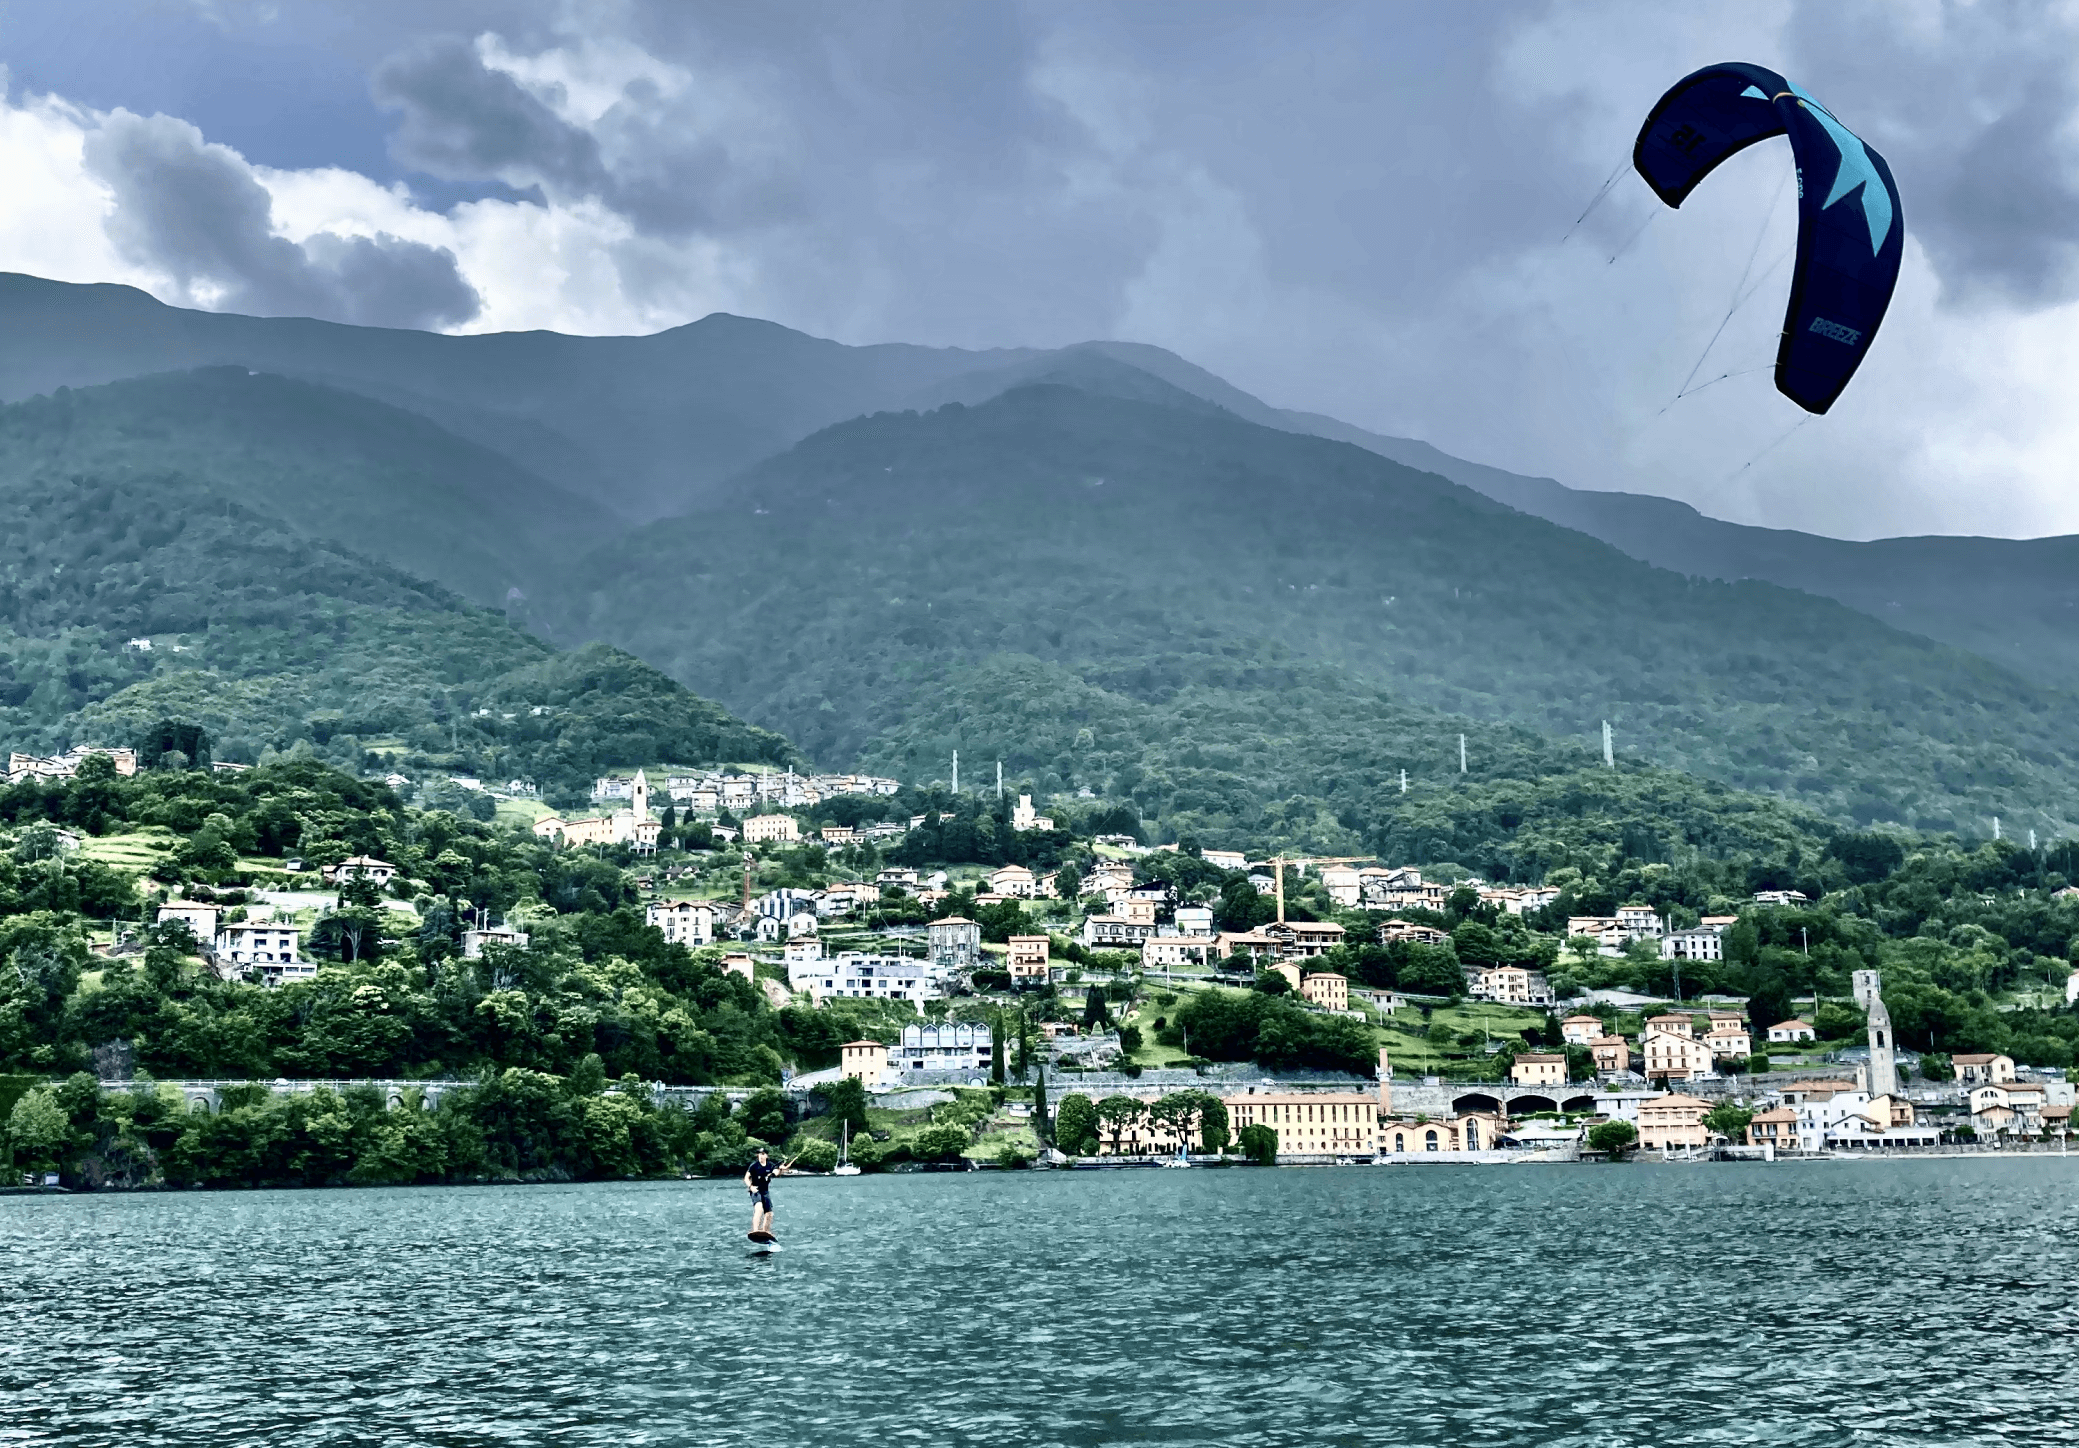 Kite foiling on Lake Como